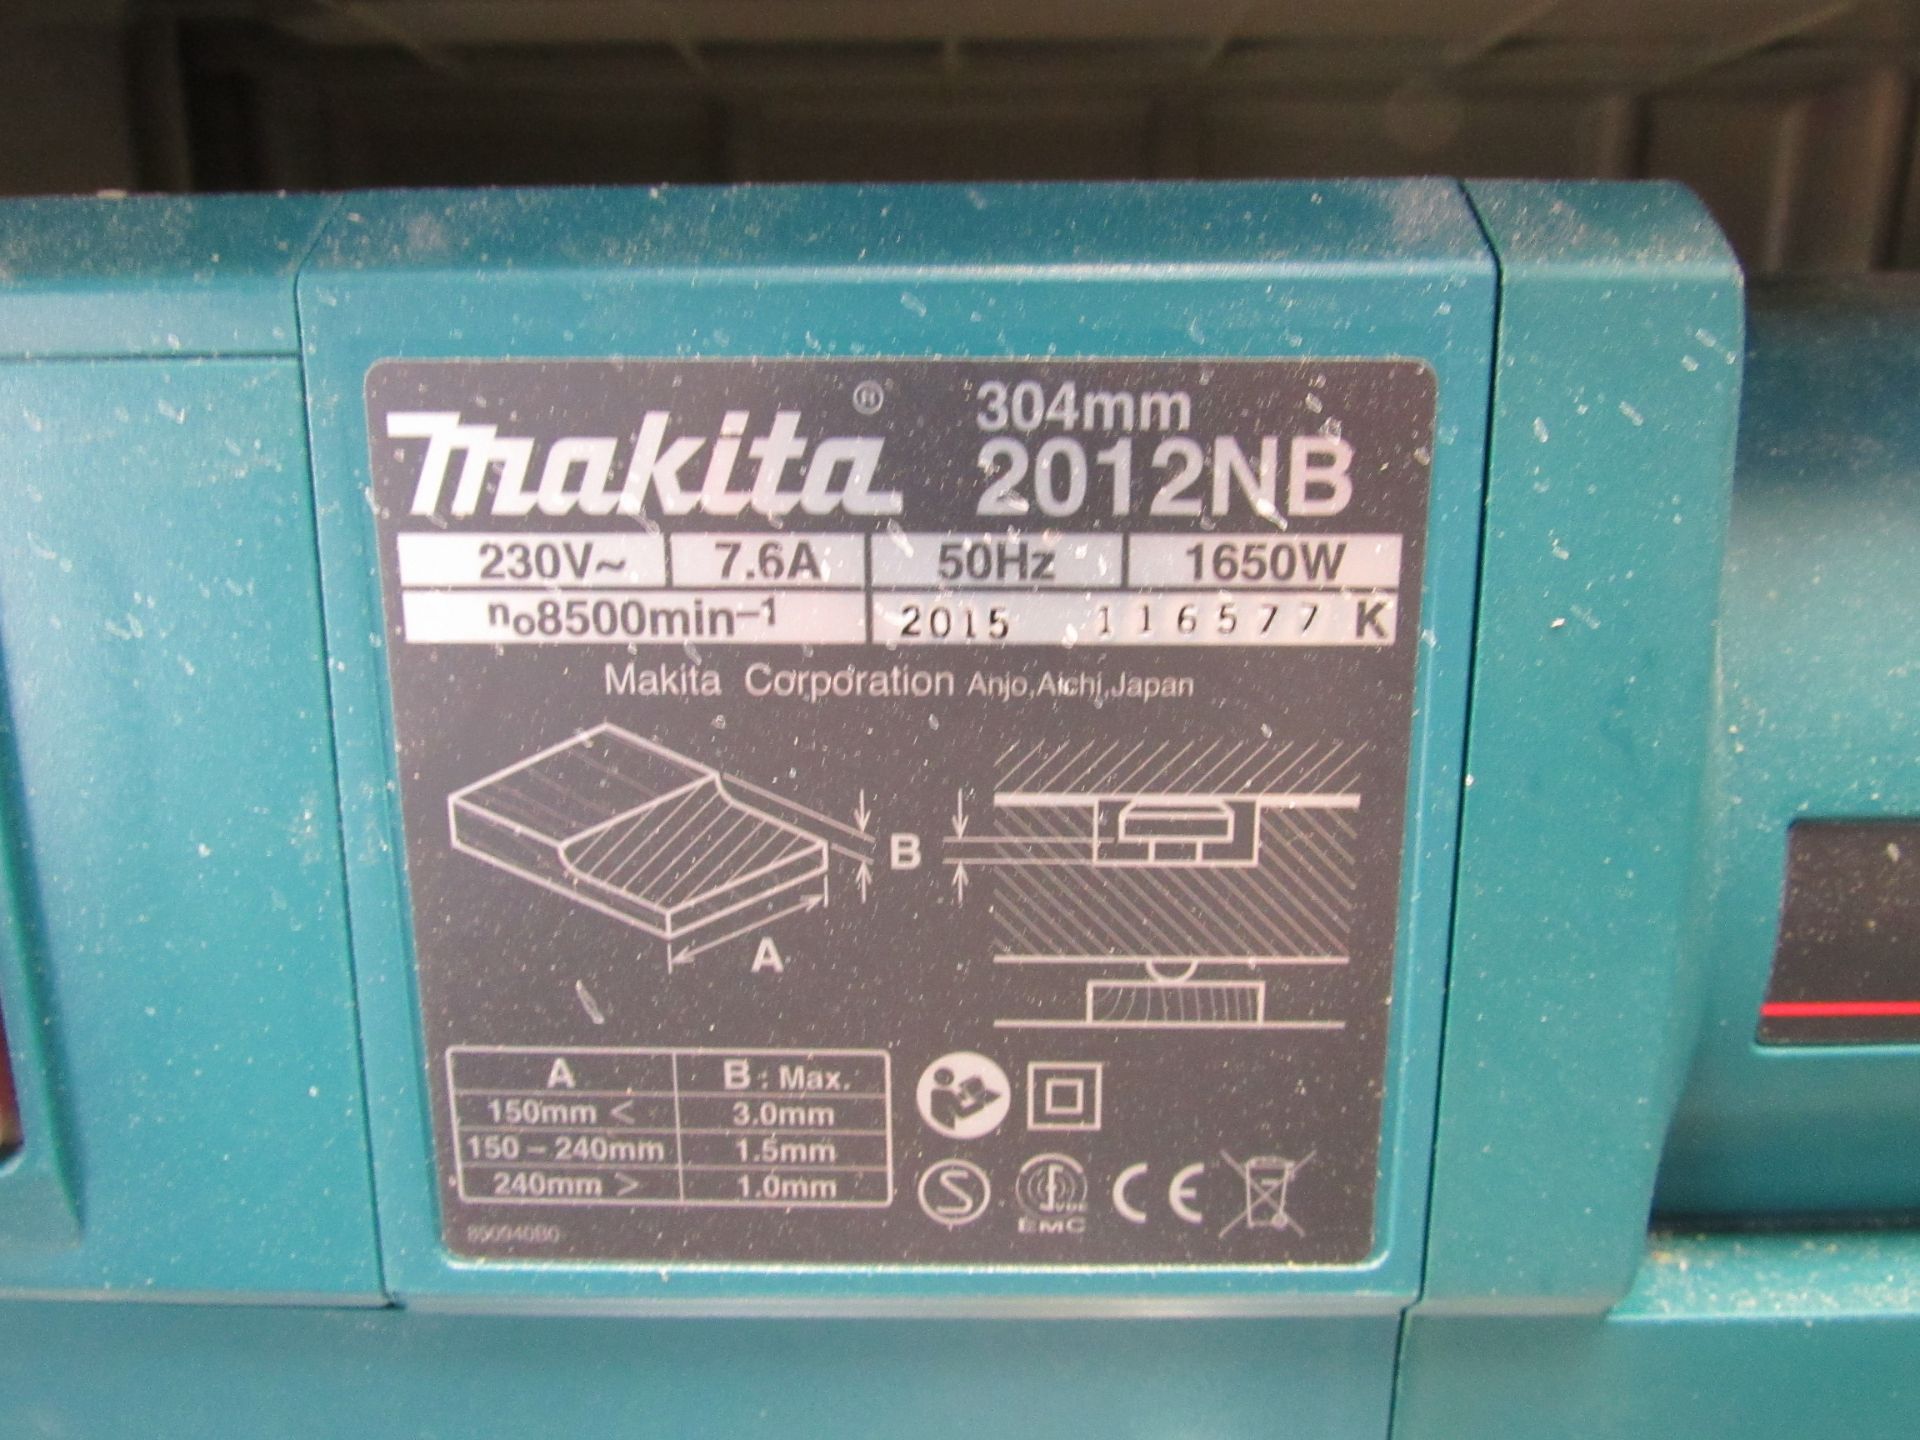 Makita 2012 NB Planet/Thicknesser 304mm, 230v, 2015, Serial Number 116577K - Image 4 of 4